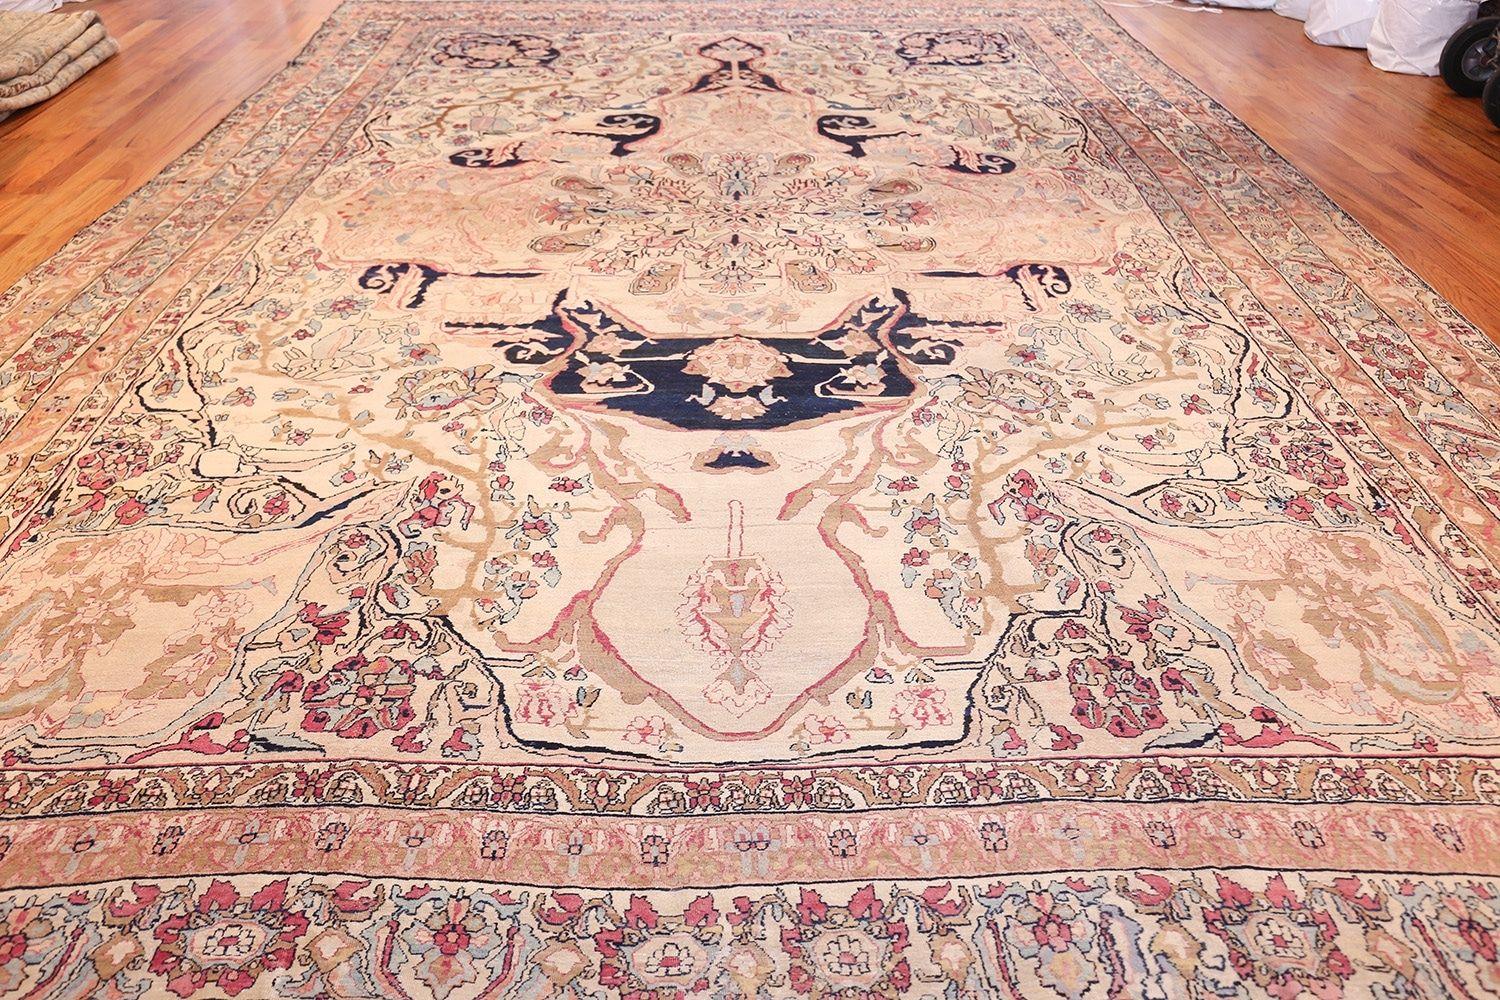 Kirman Antique Persian Kerman Rug. Size: 10 ft 9 in x 17 ft 6 in (3.28 m x 5.33 m)